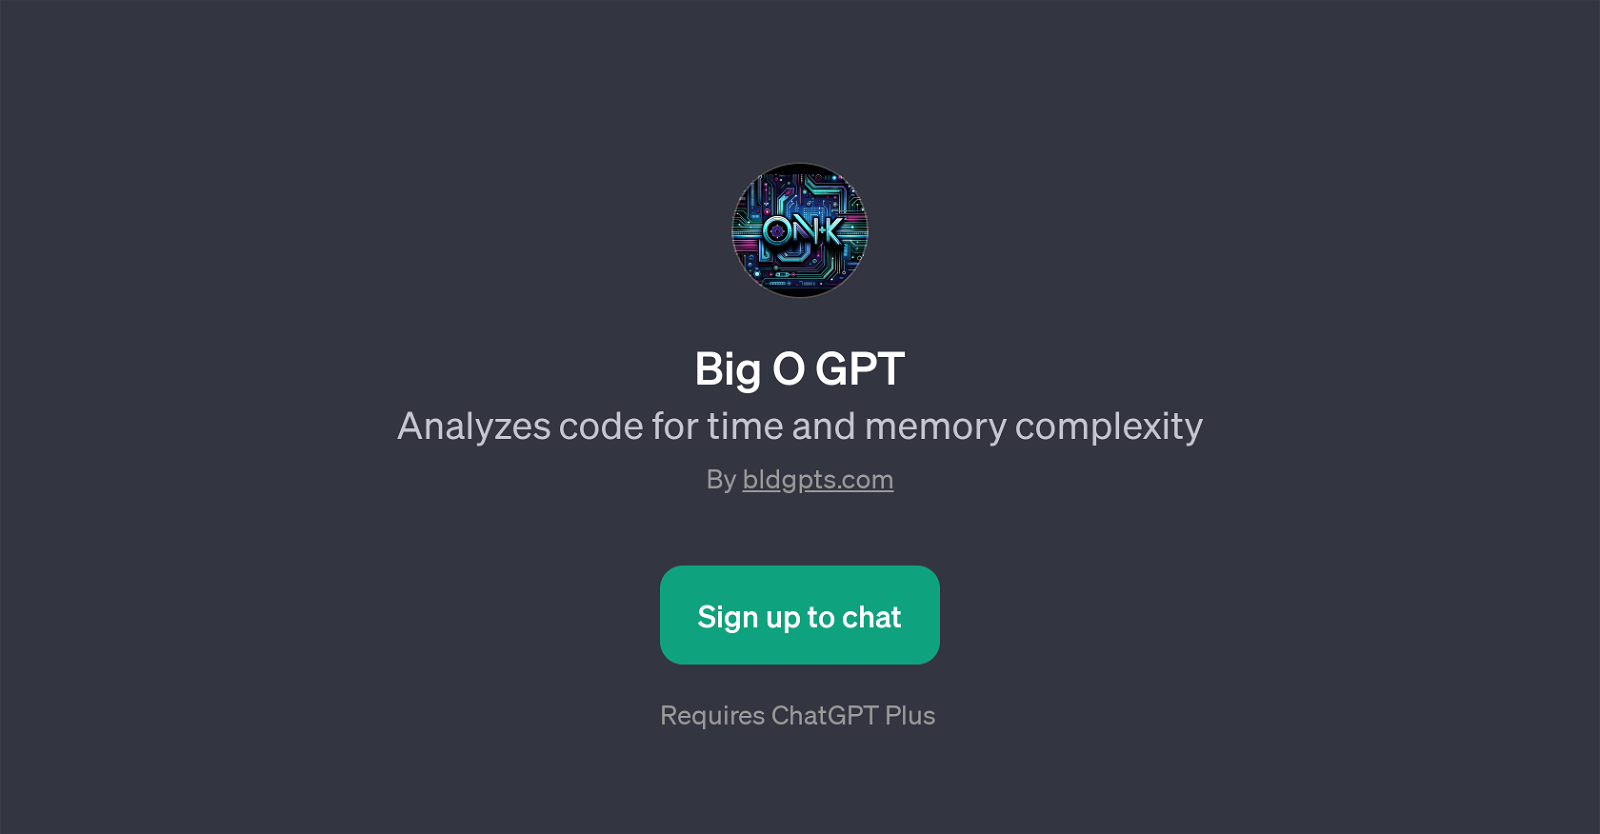 Big O GPT website